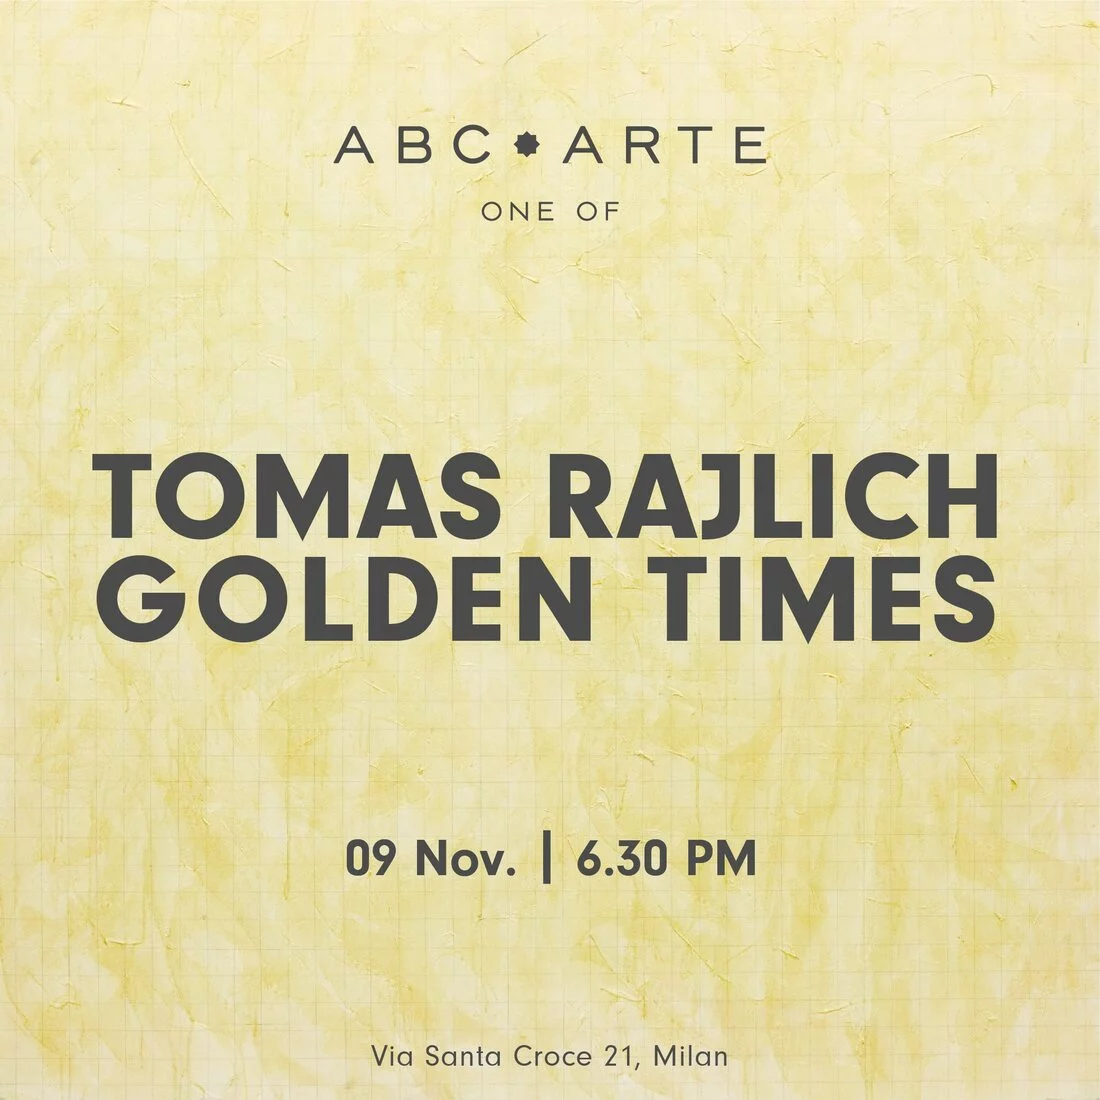 Tomas Rajlich. Golden times